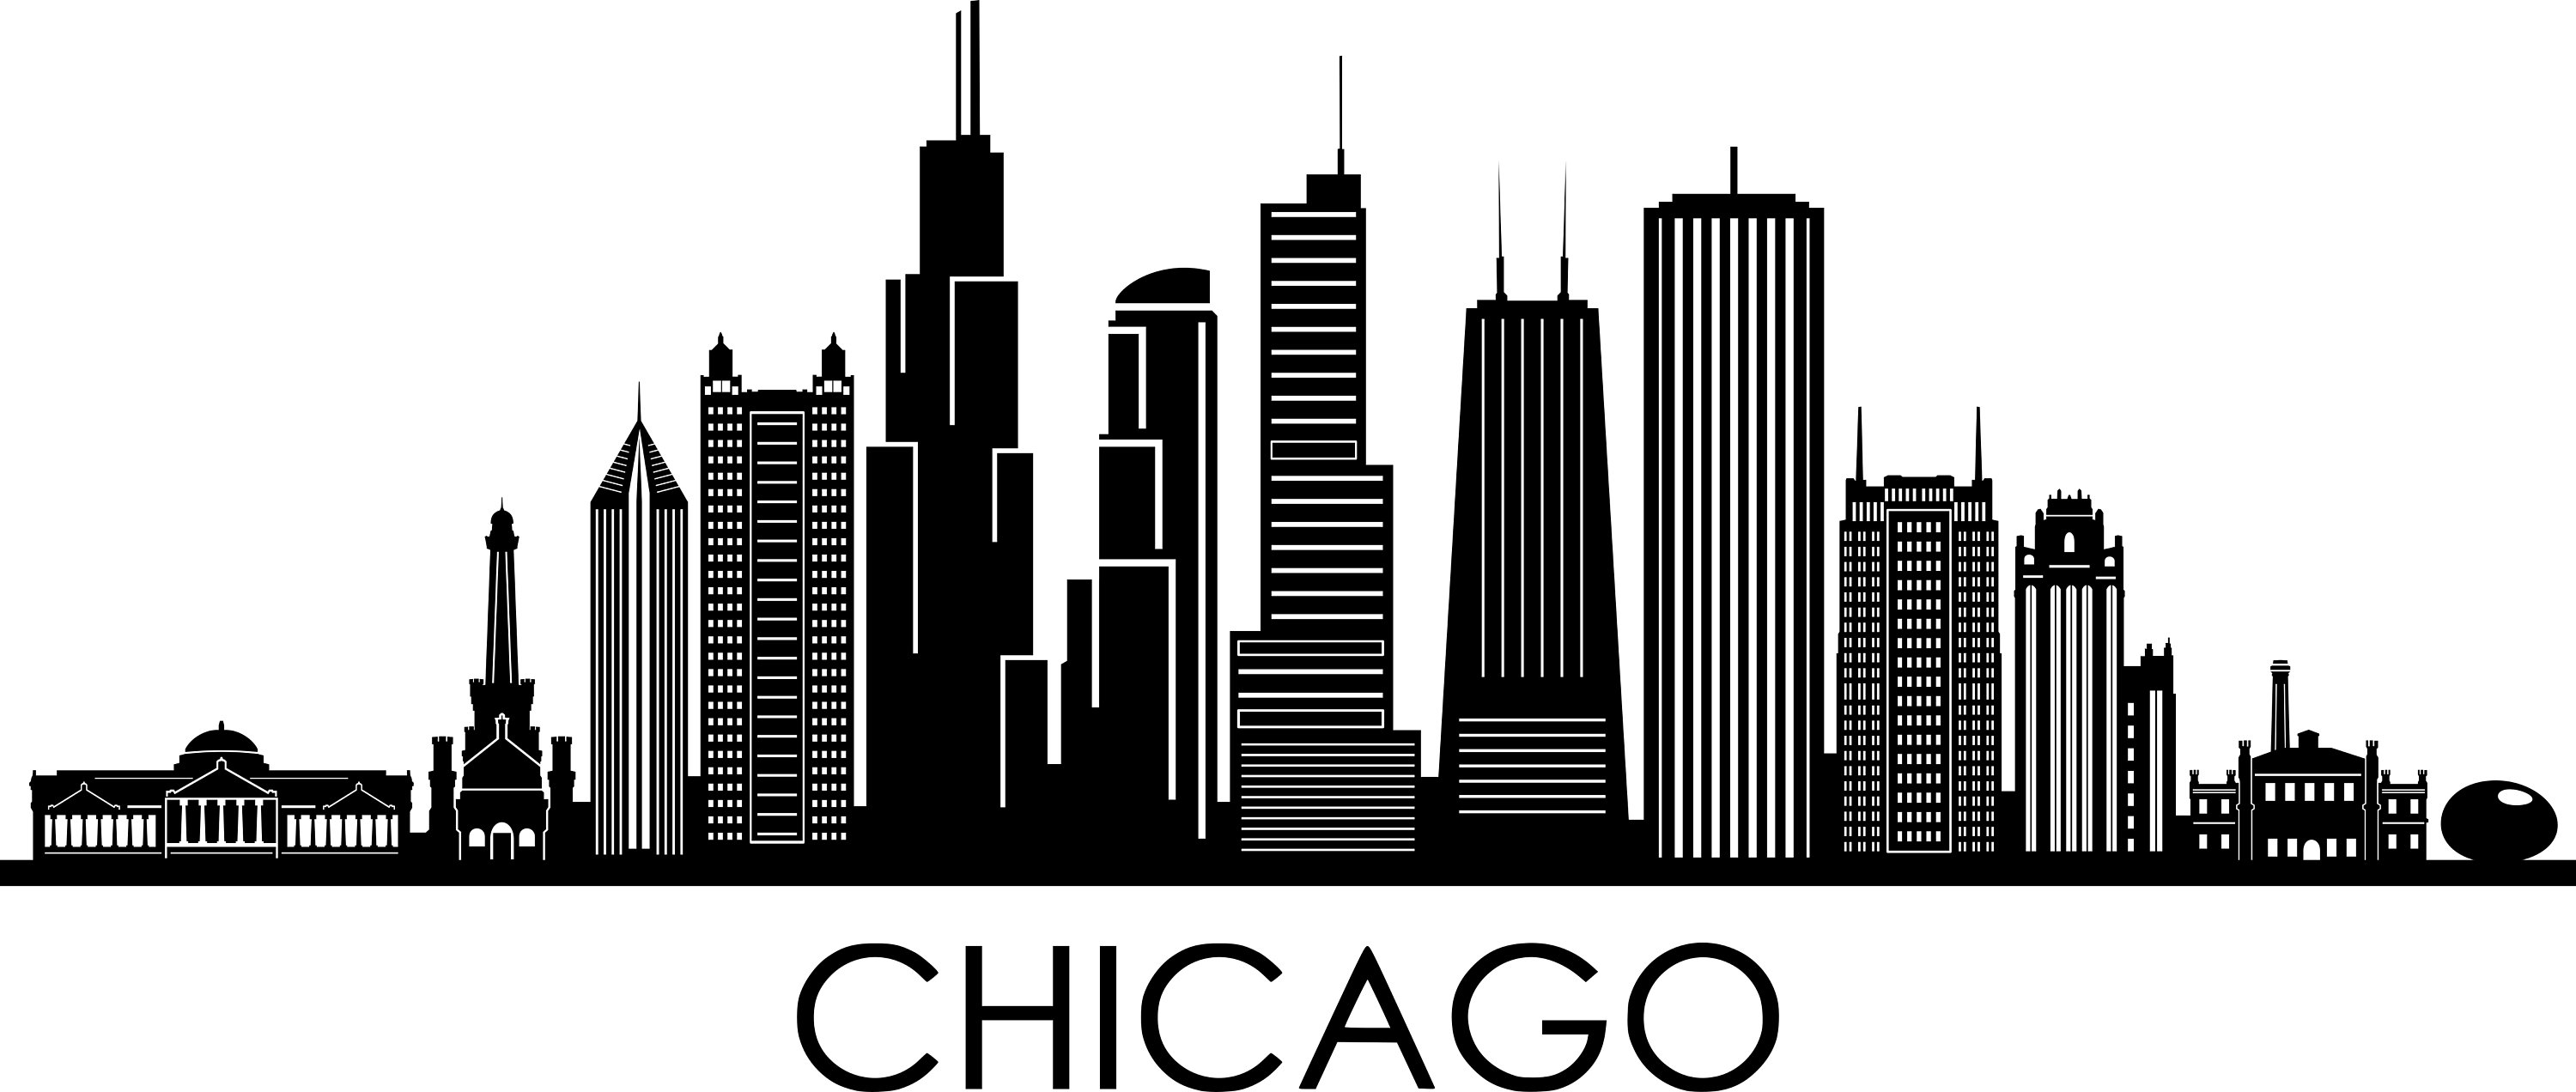 chicago skyline outline